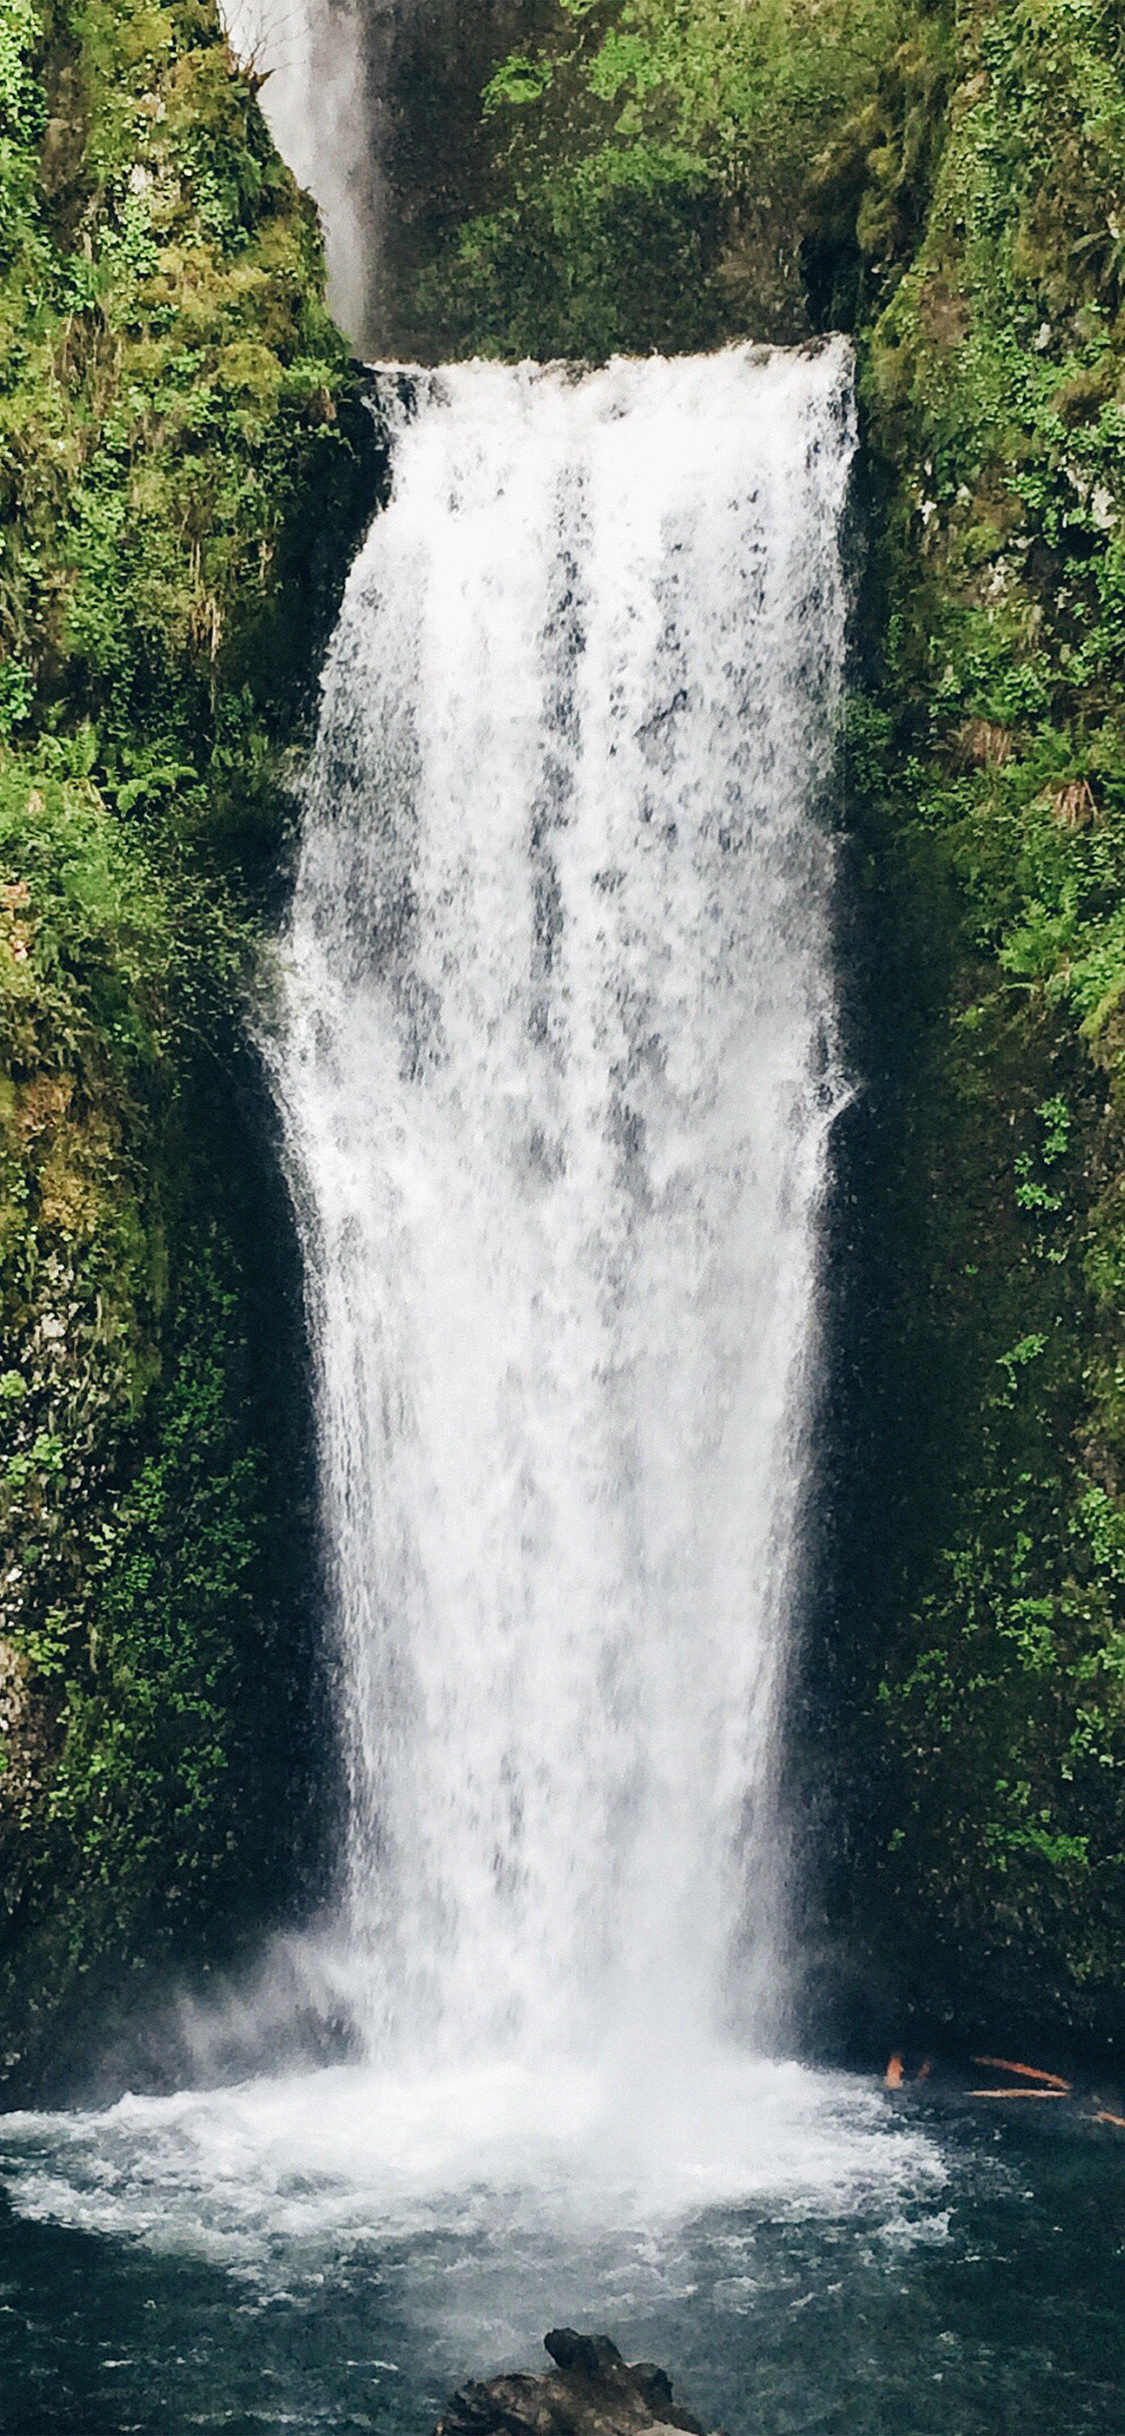 iPhone X wallpaper. waterfall nature vacation green